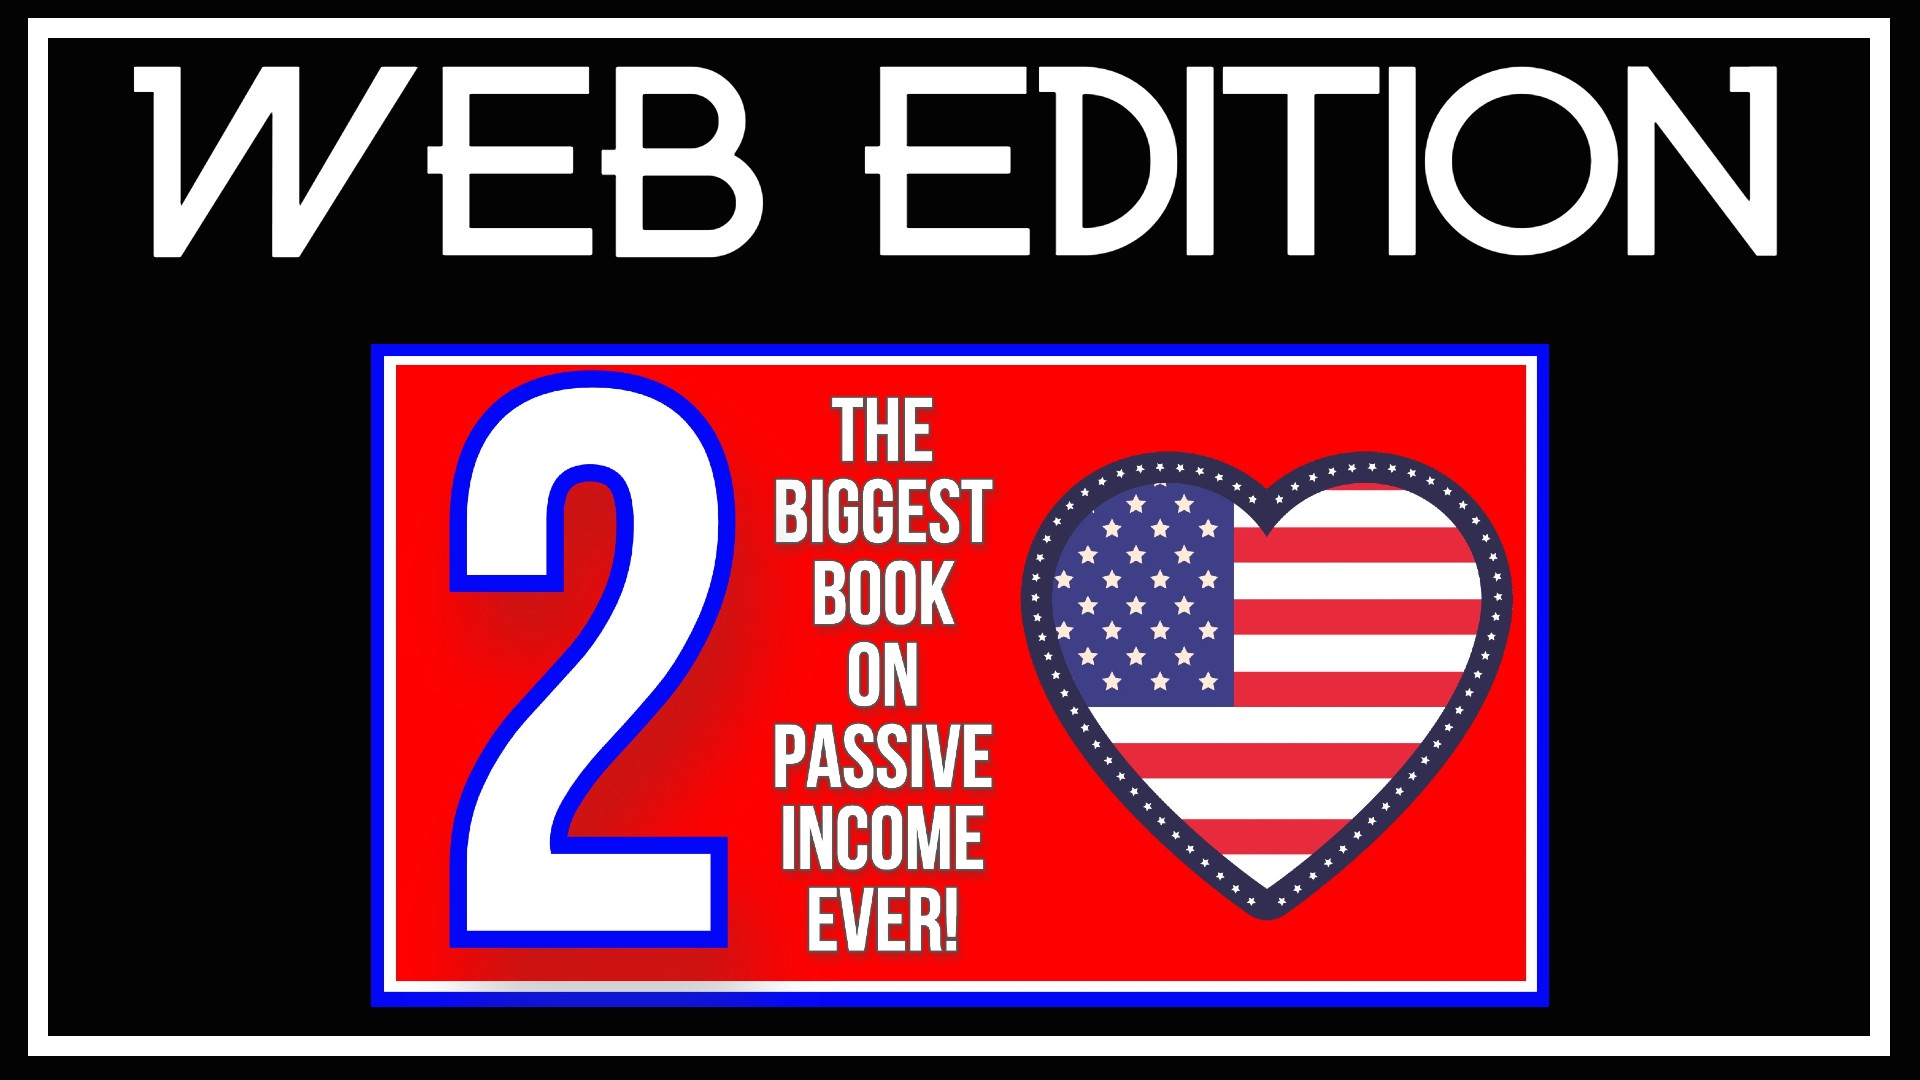 Web Edition- The Biggest Book on Passive Income Ever 2!